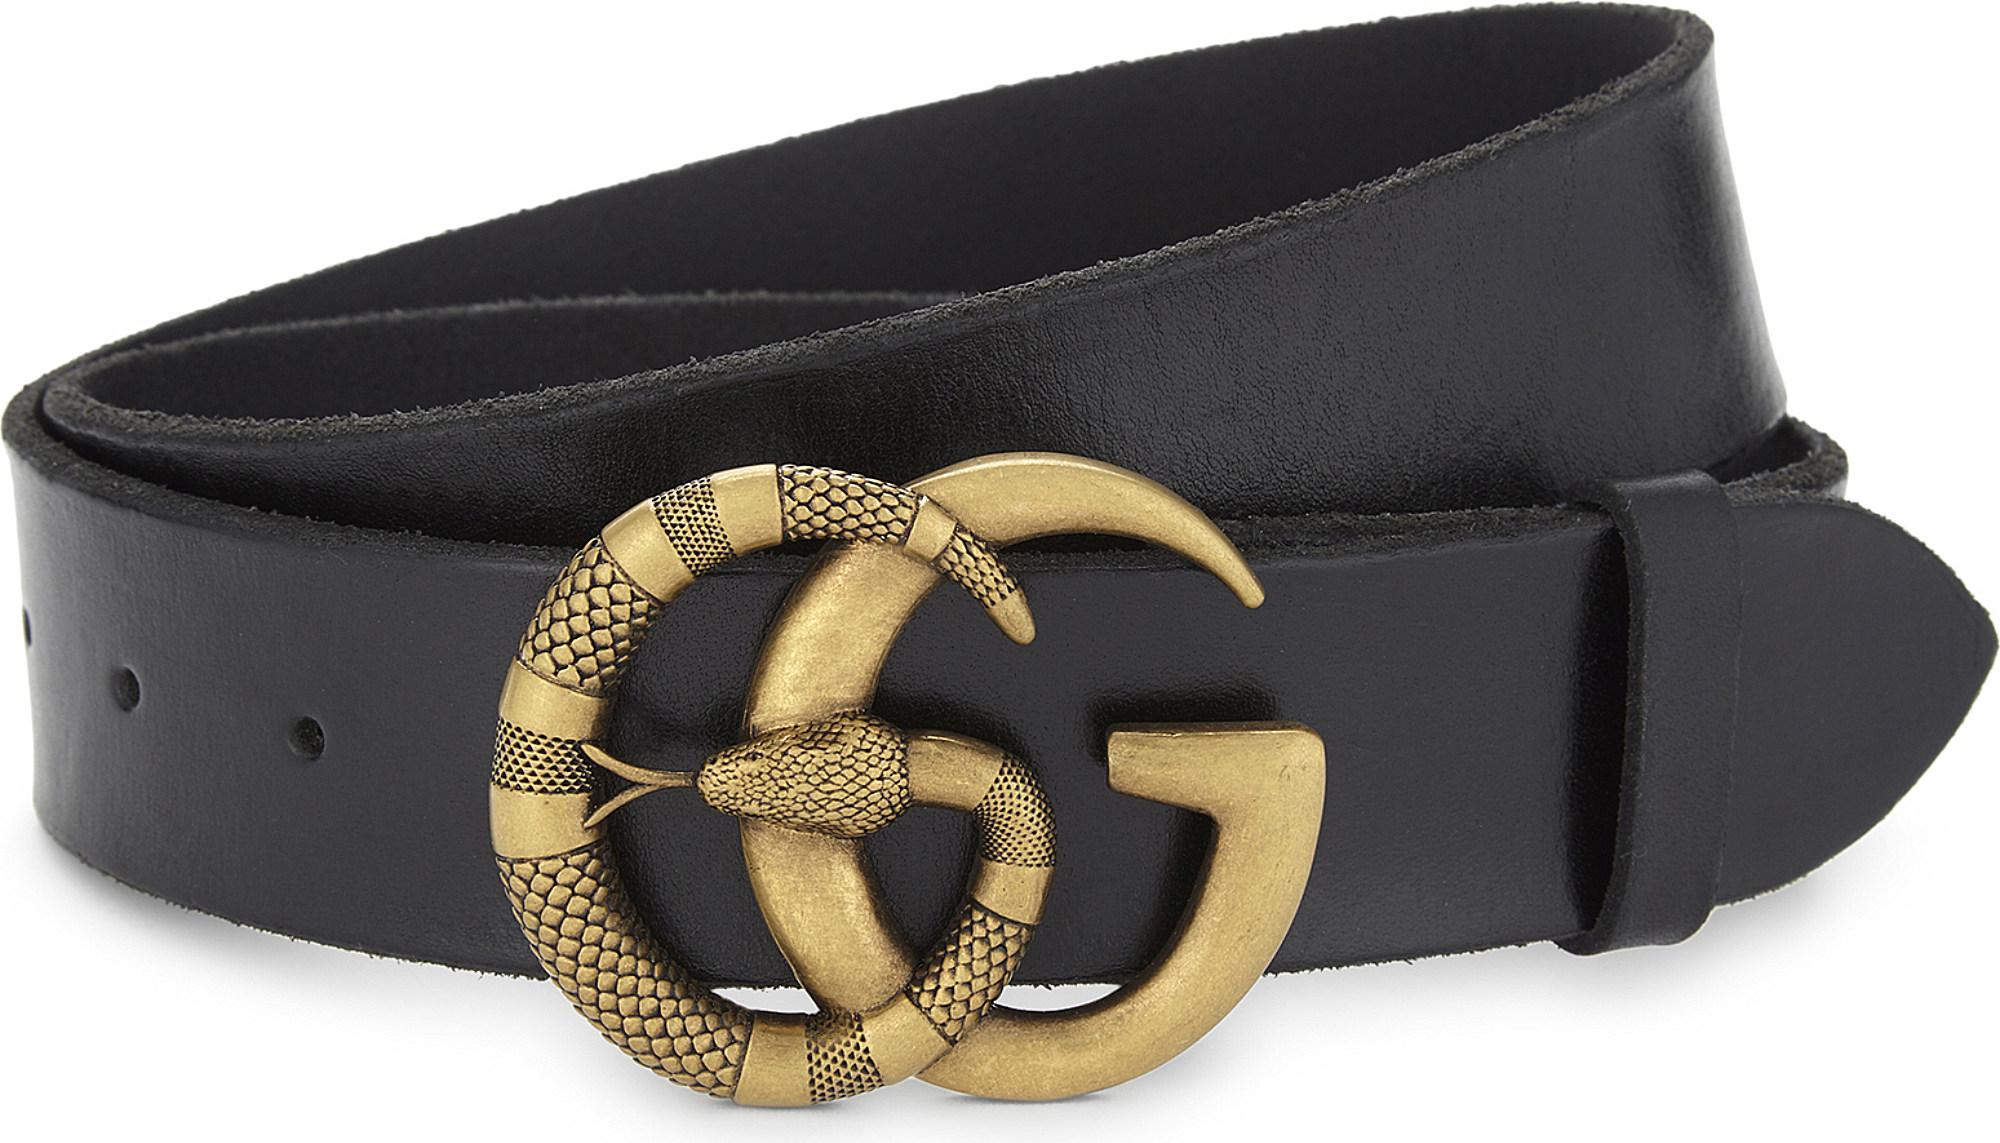 Gucci Snake Gg Buckle Leather Belt in Black for Men - Lyst